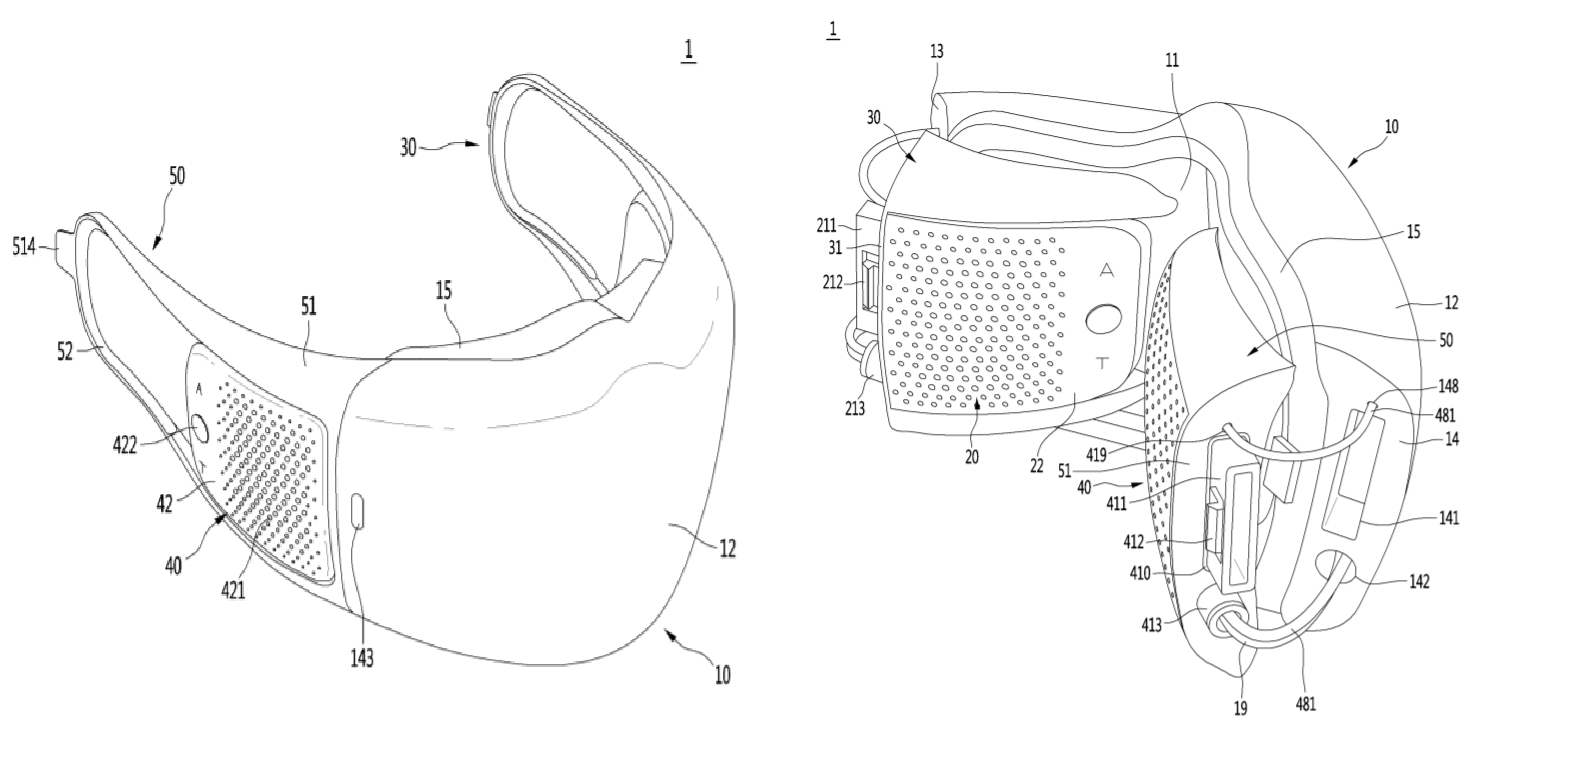 LG전자 마스크형 공기청정기 특허 공개, 접히는 형태로 휴대 편리